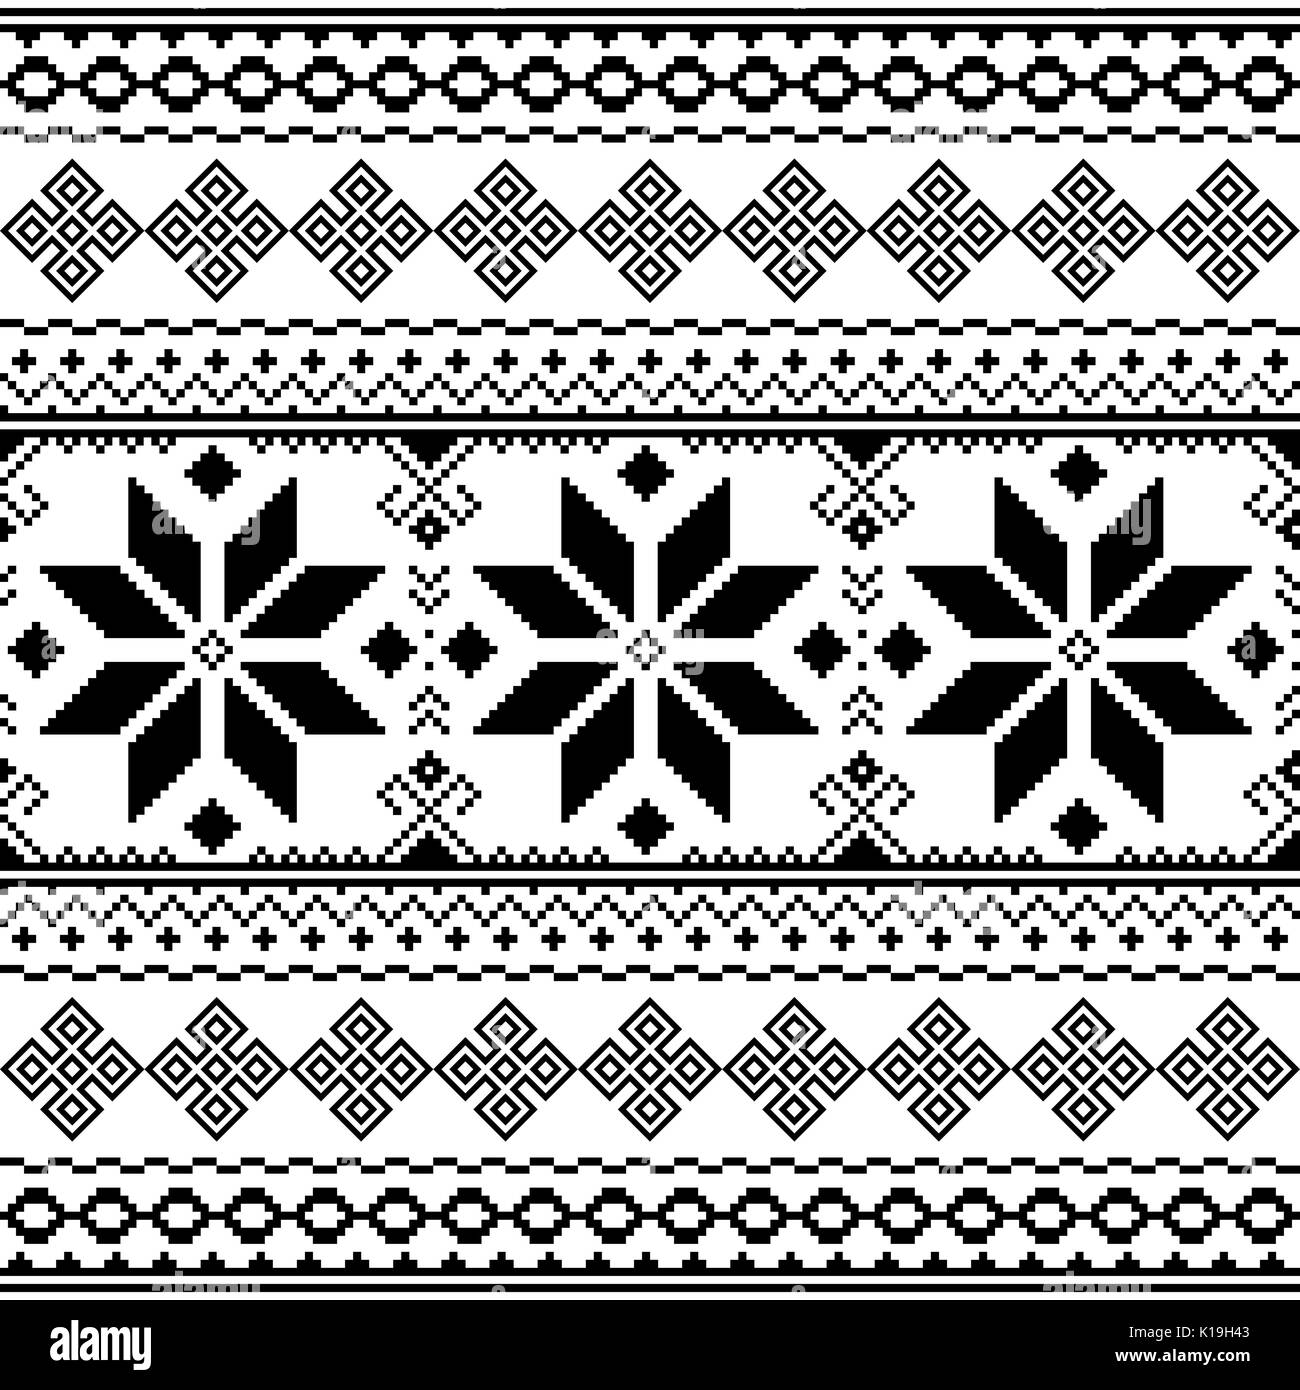 Traditional folk black embroidery pattern from Ukraine or Belarus - Vyshyvanka Stock Vector